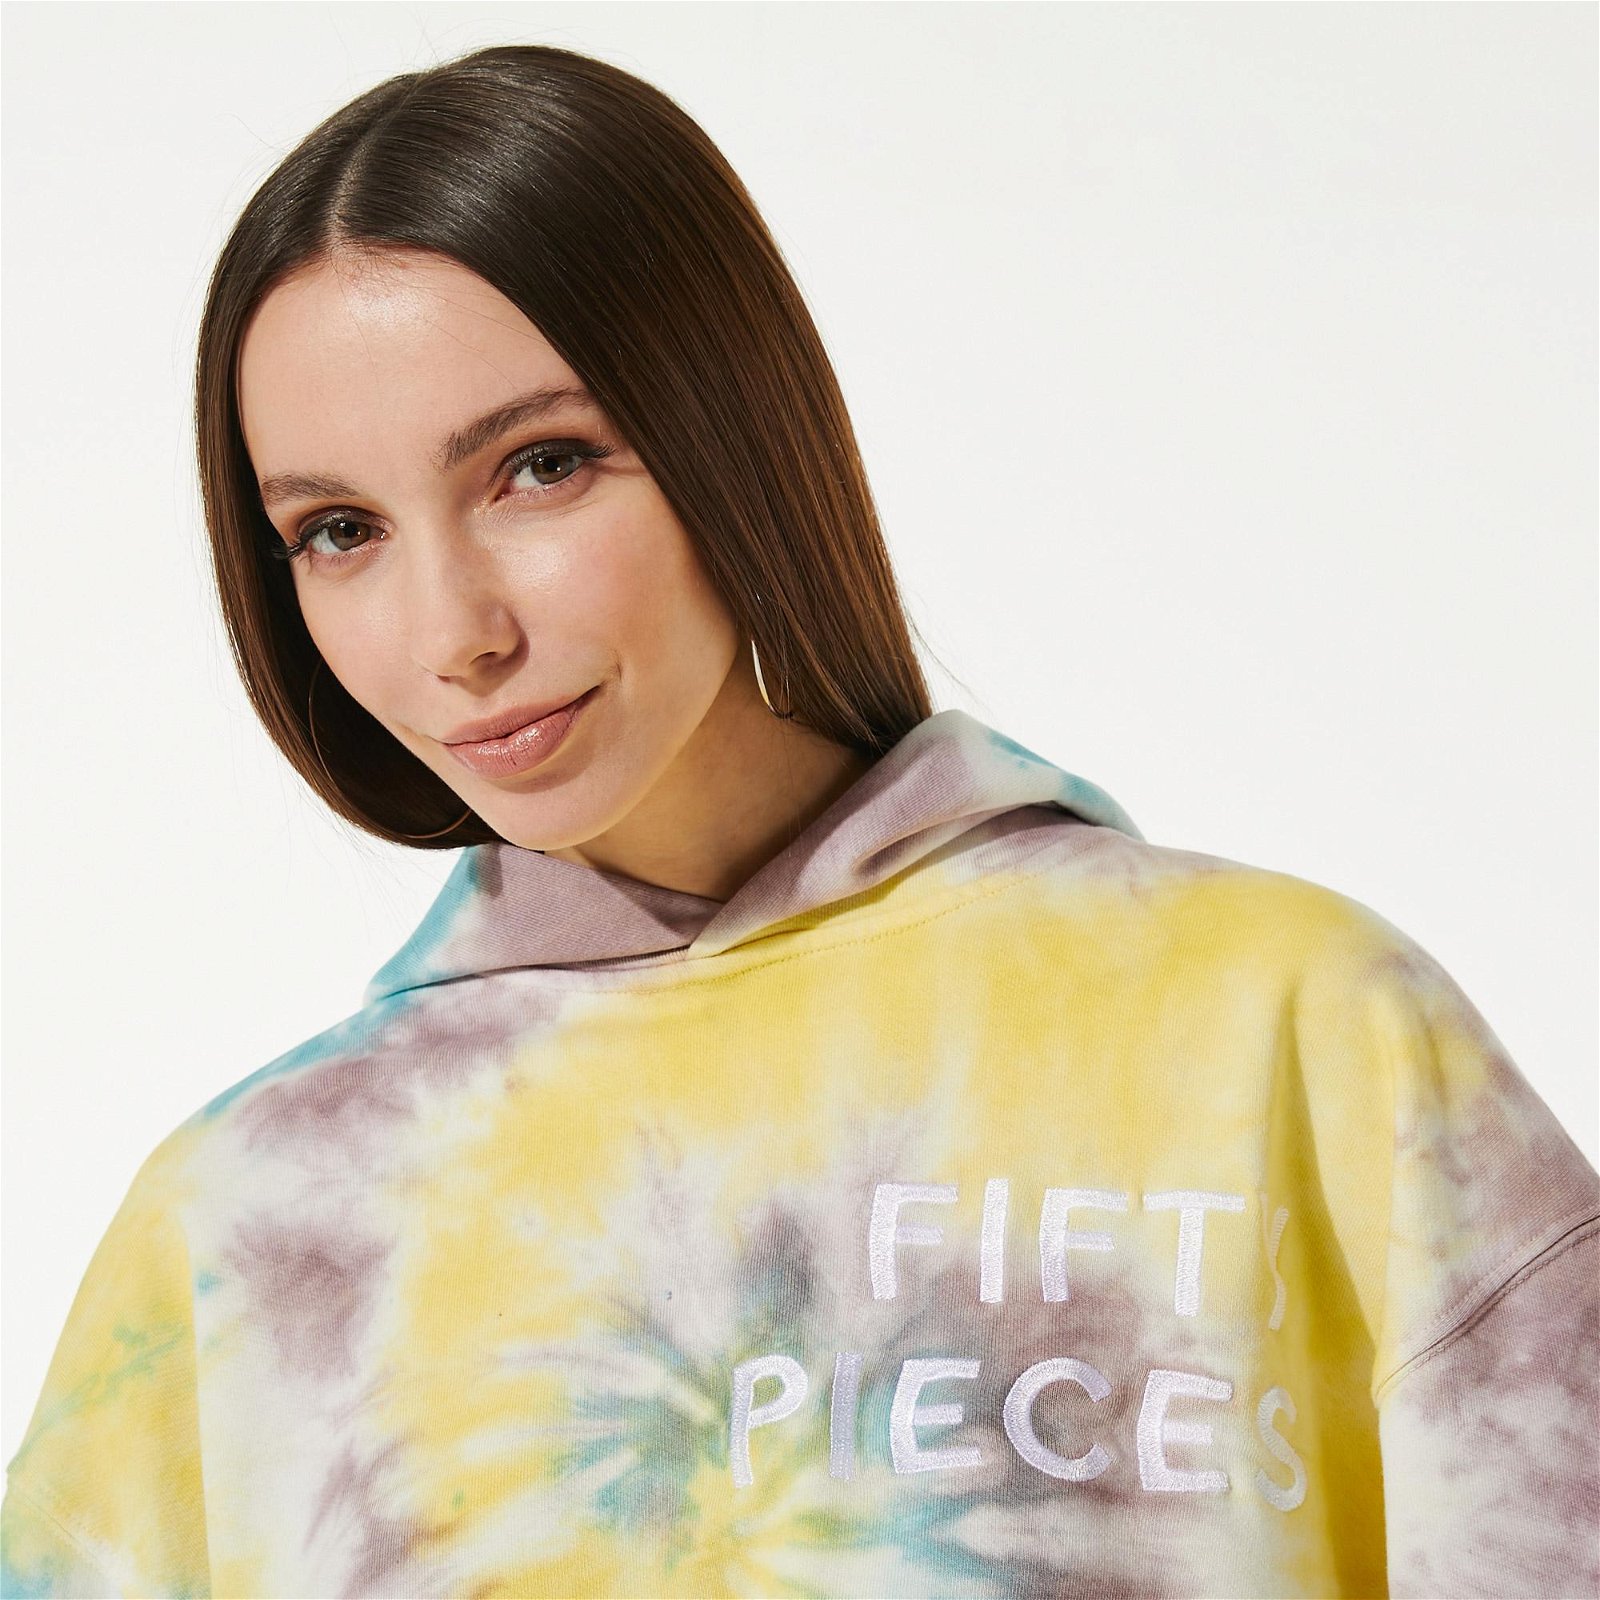 Fifty Pieces Kadın Batik Renkli Hoodie Sweatshirt